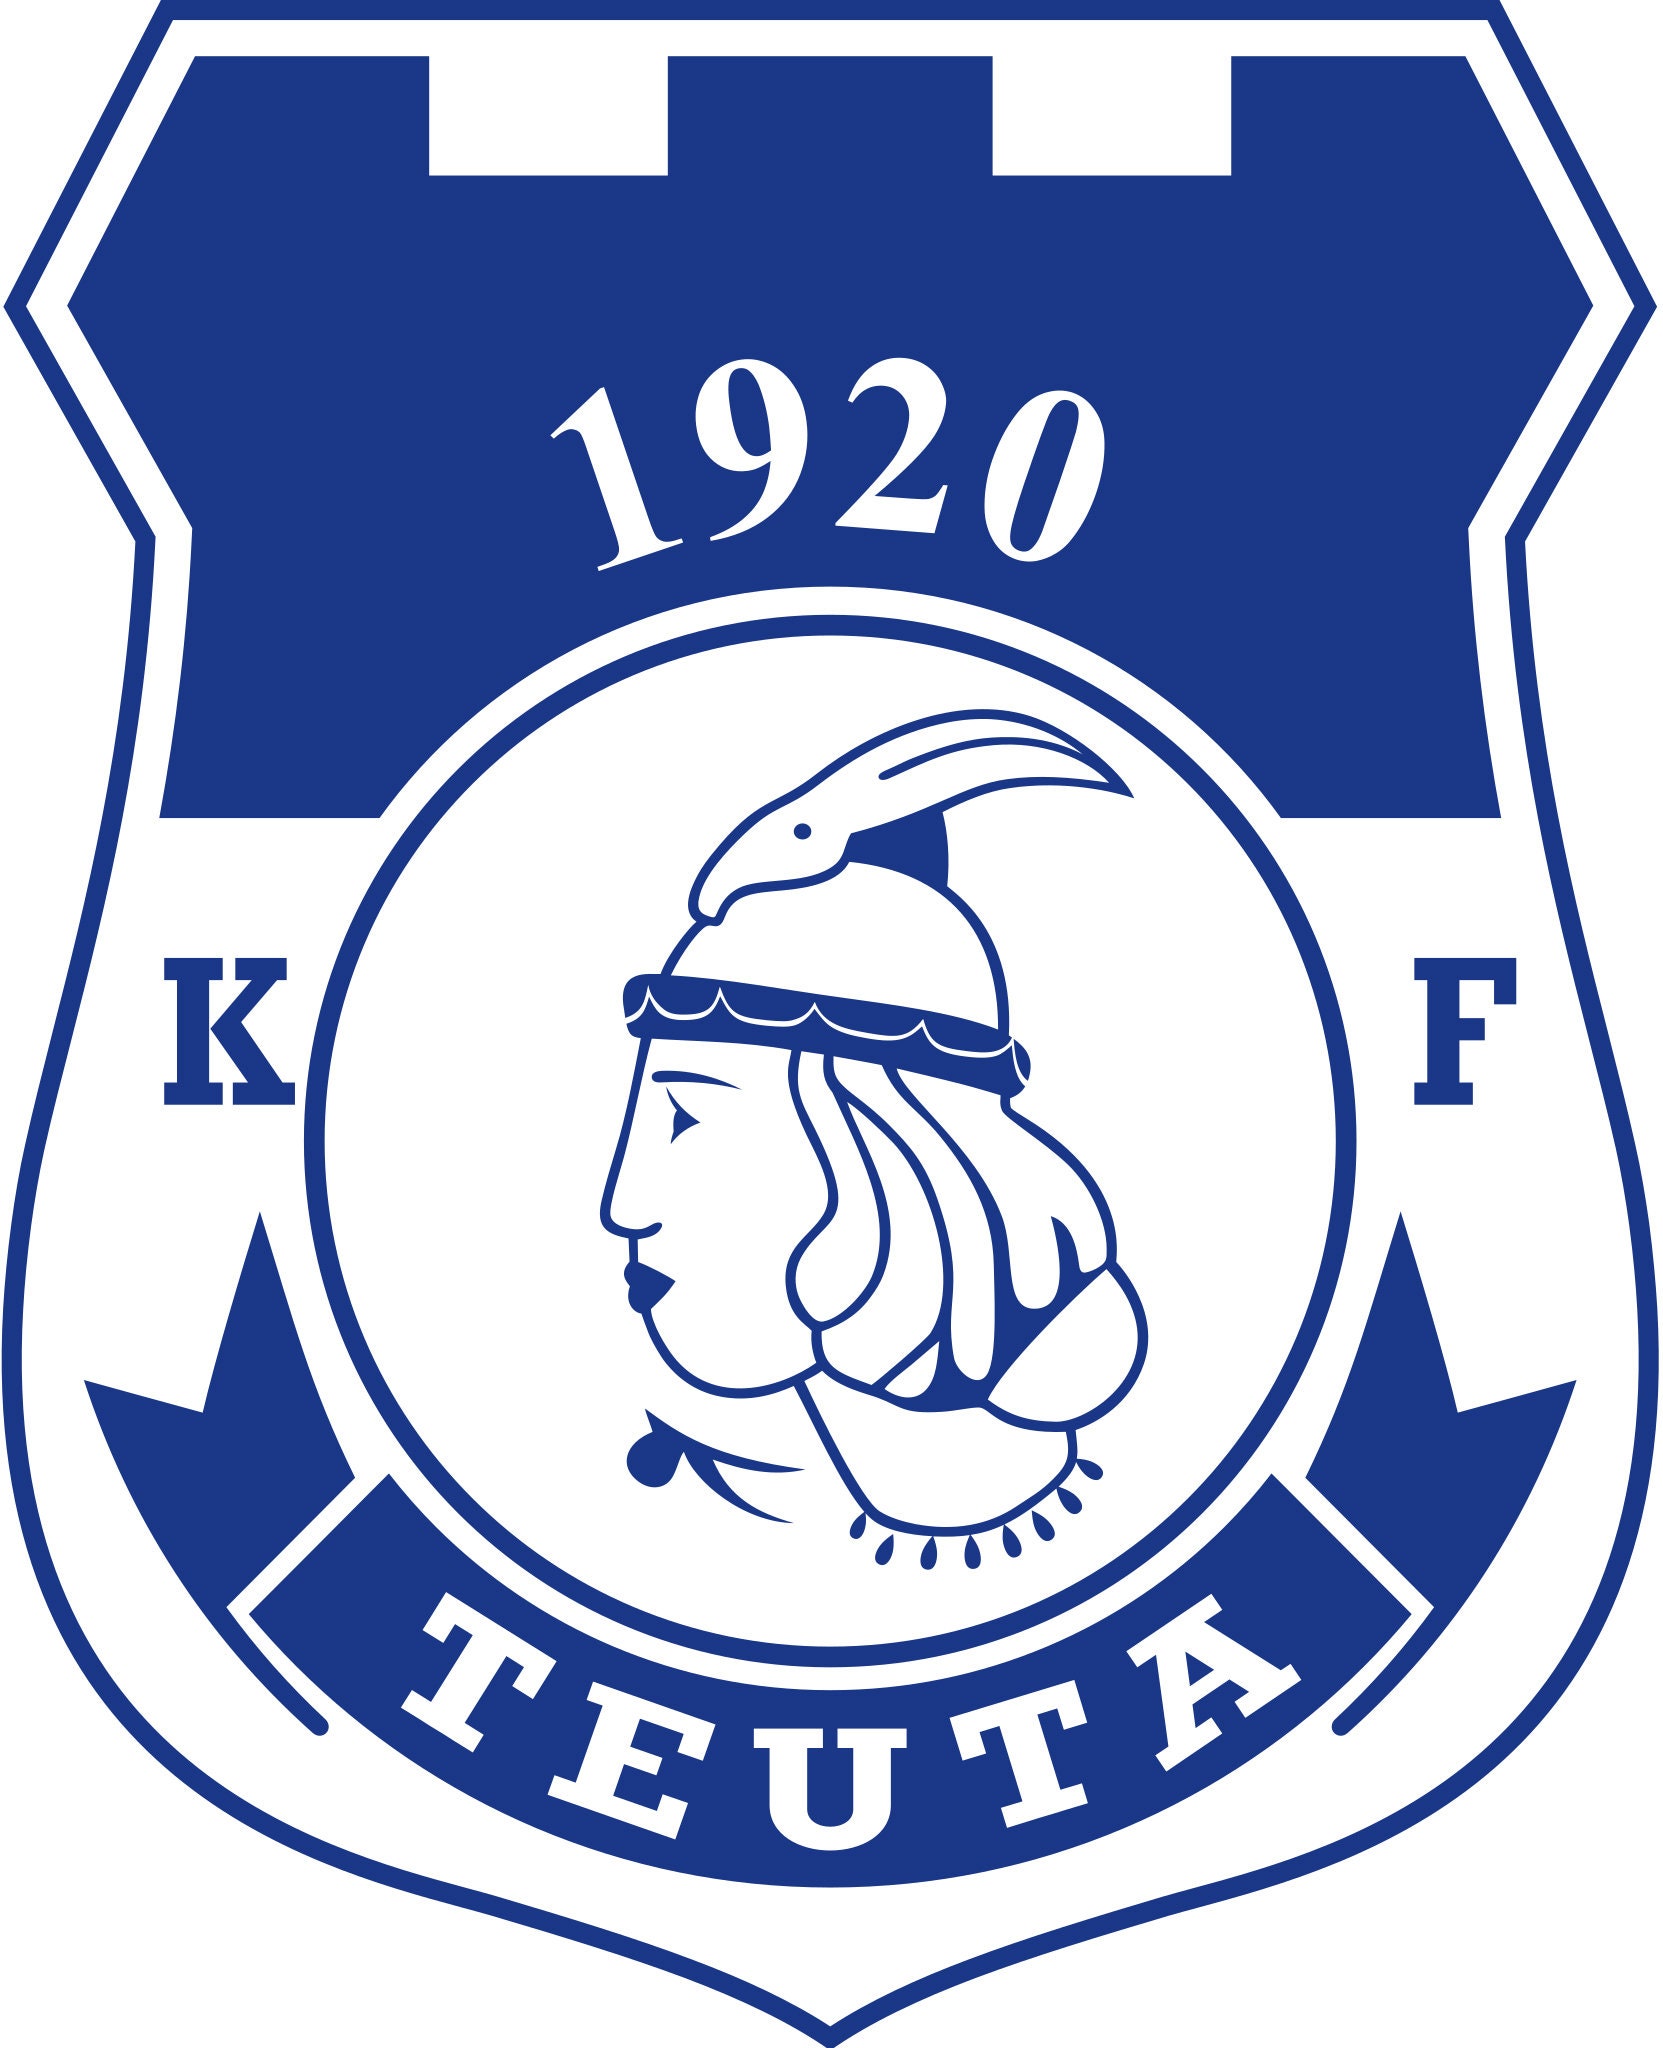 Club: FK Kukesi